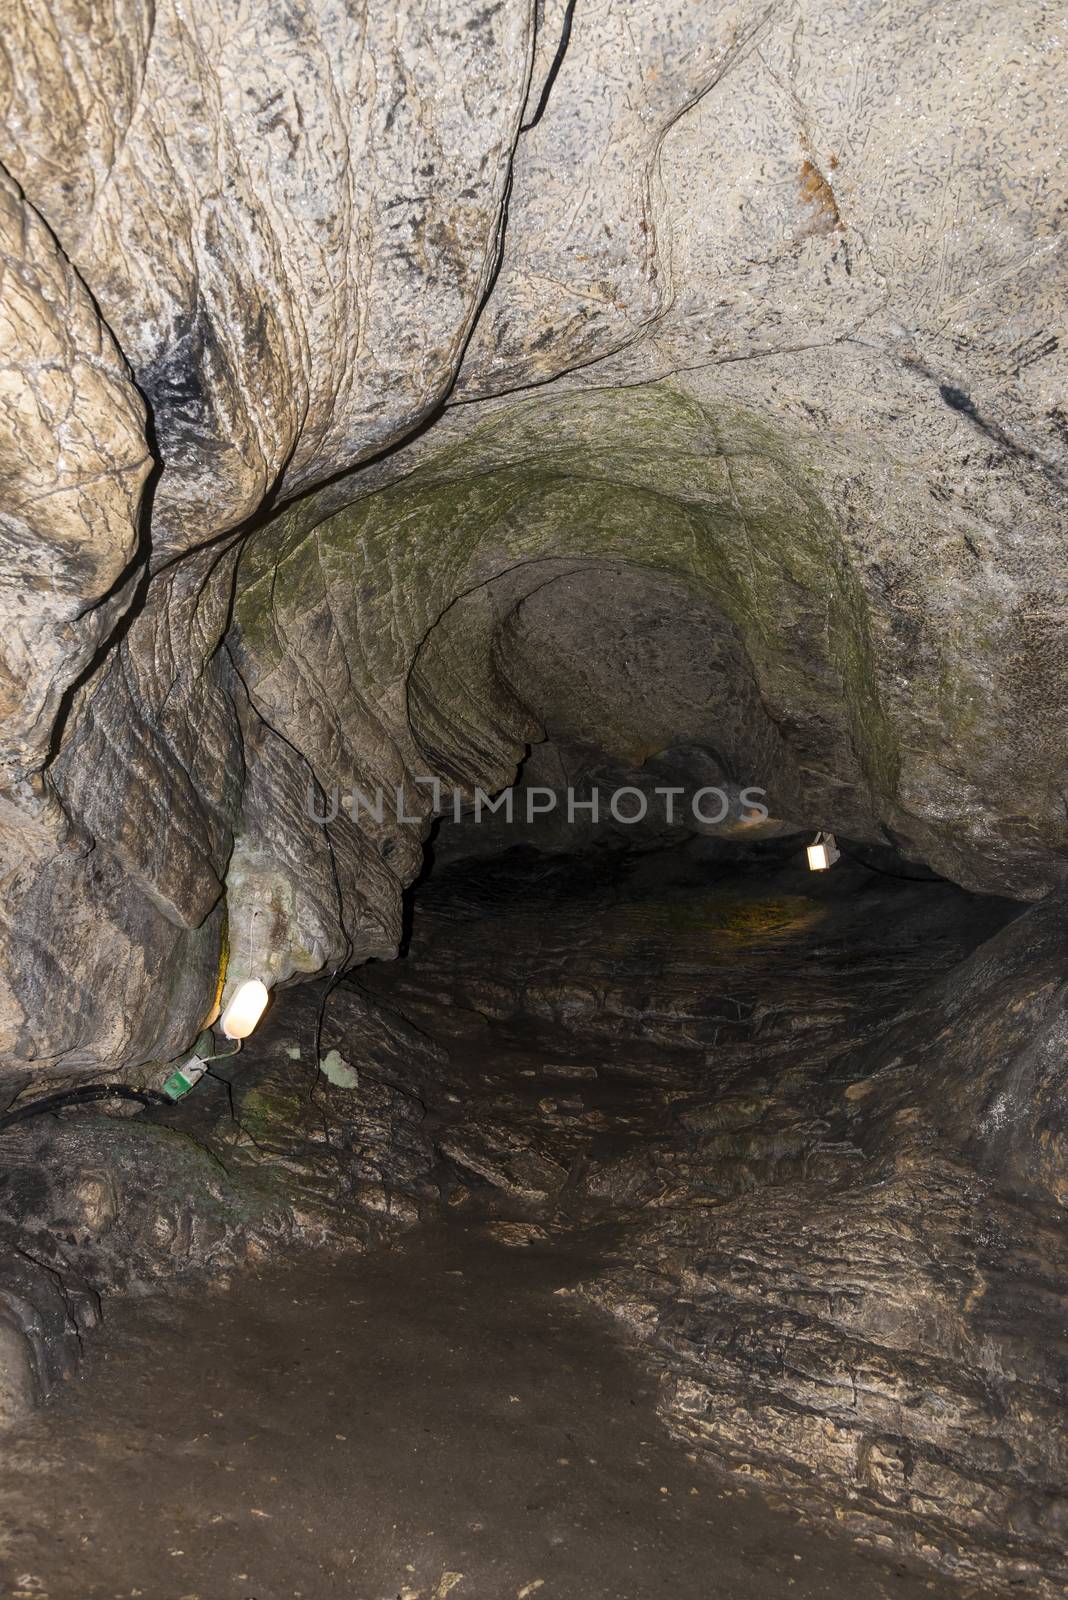 Akhshtyrskaya cave is a landmark near the city of Sochi, Russia. 27 October 2019.